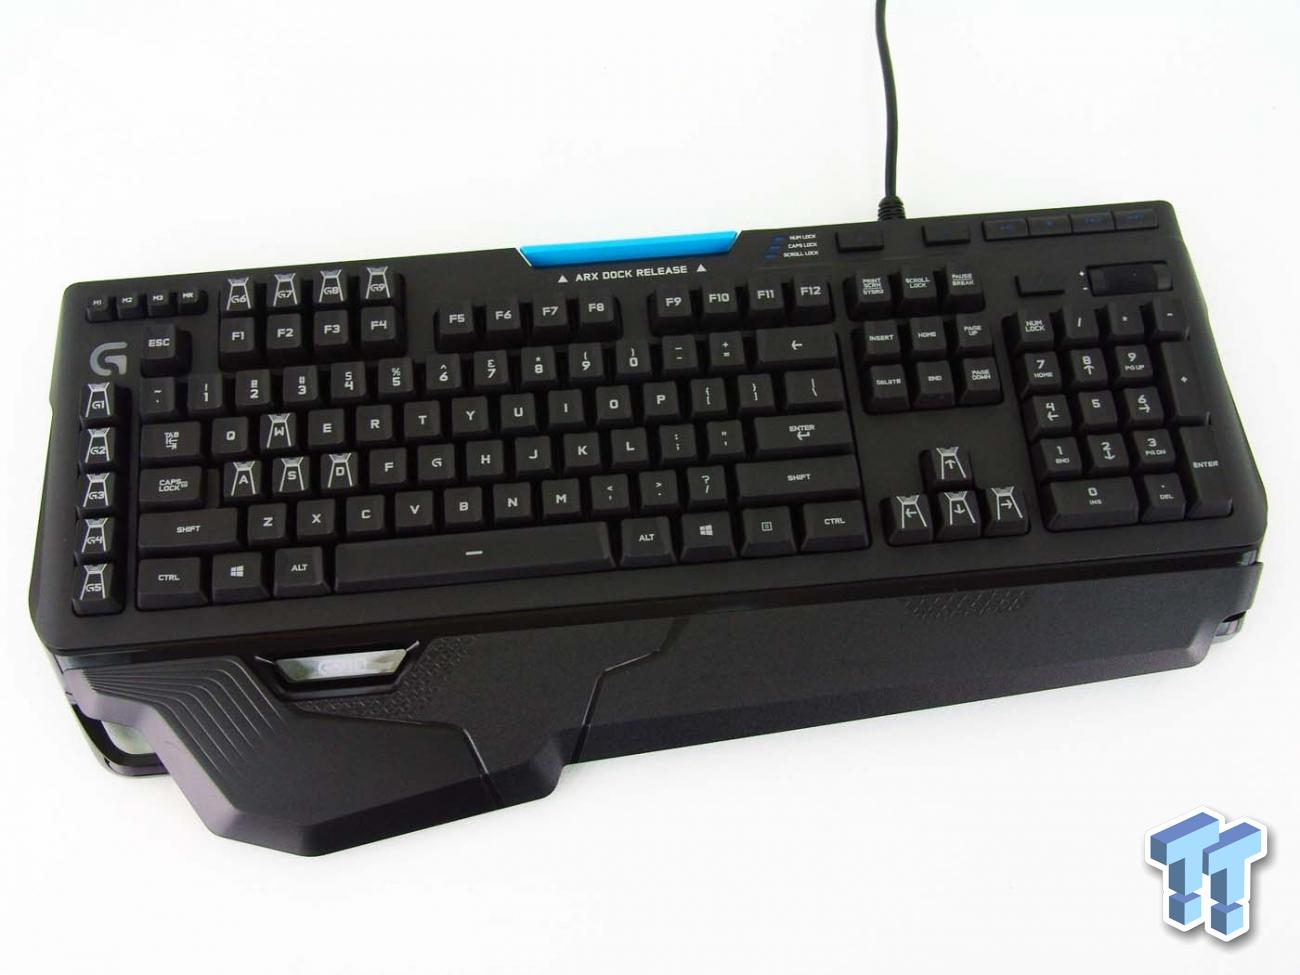 molester angre virksomhed Logitech G910 Orion Spark RGB Mechanical Gaming Keyboard Review